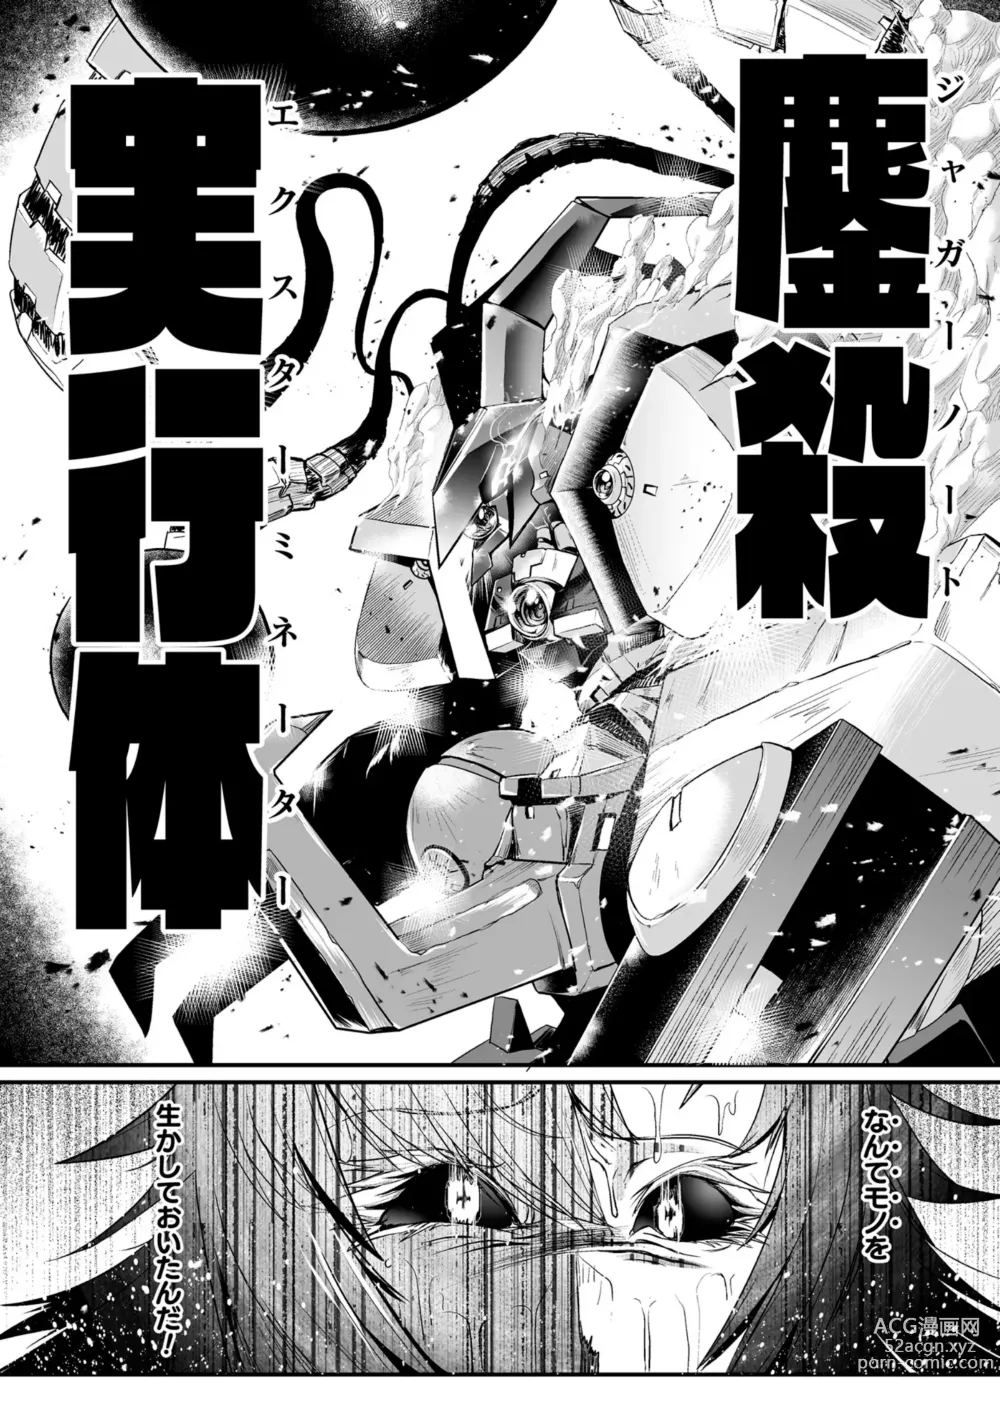 Page 32 of manga Carbonite Cocytus - Episode III